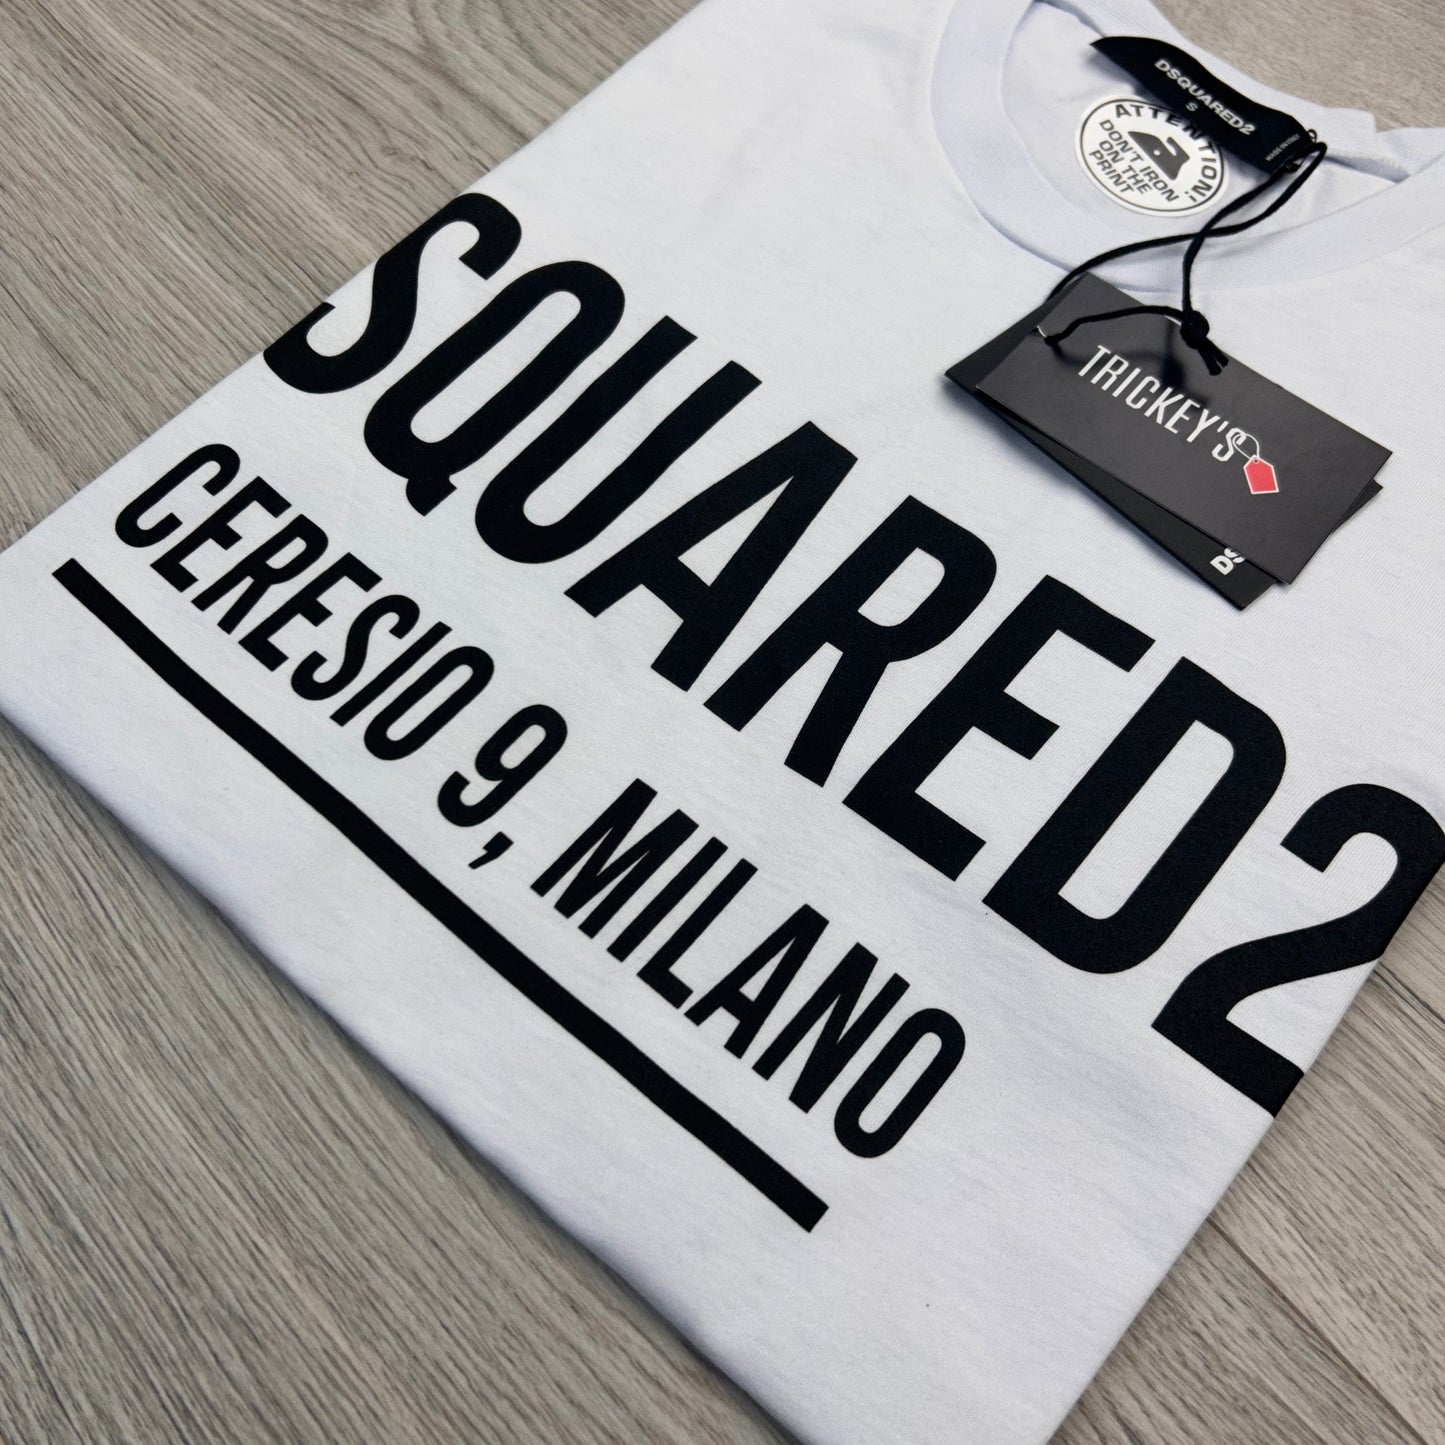 Dsquared2 Ceresio 9, Milano Men’s White T-shirt